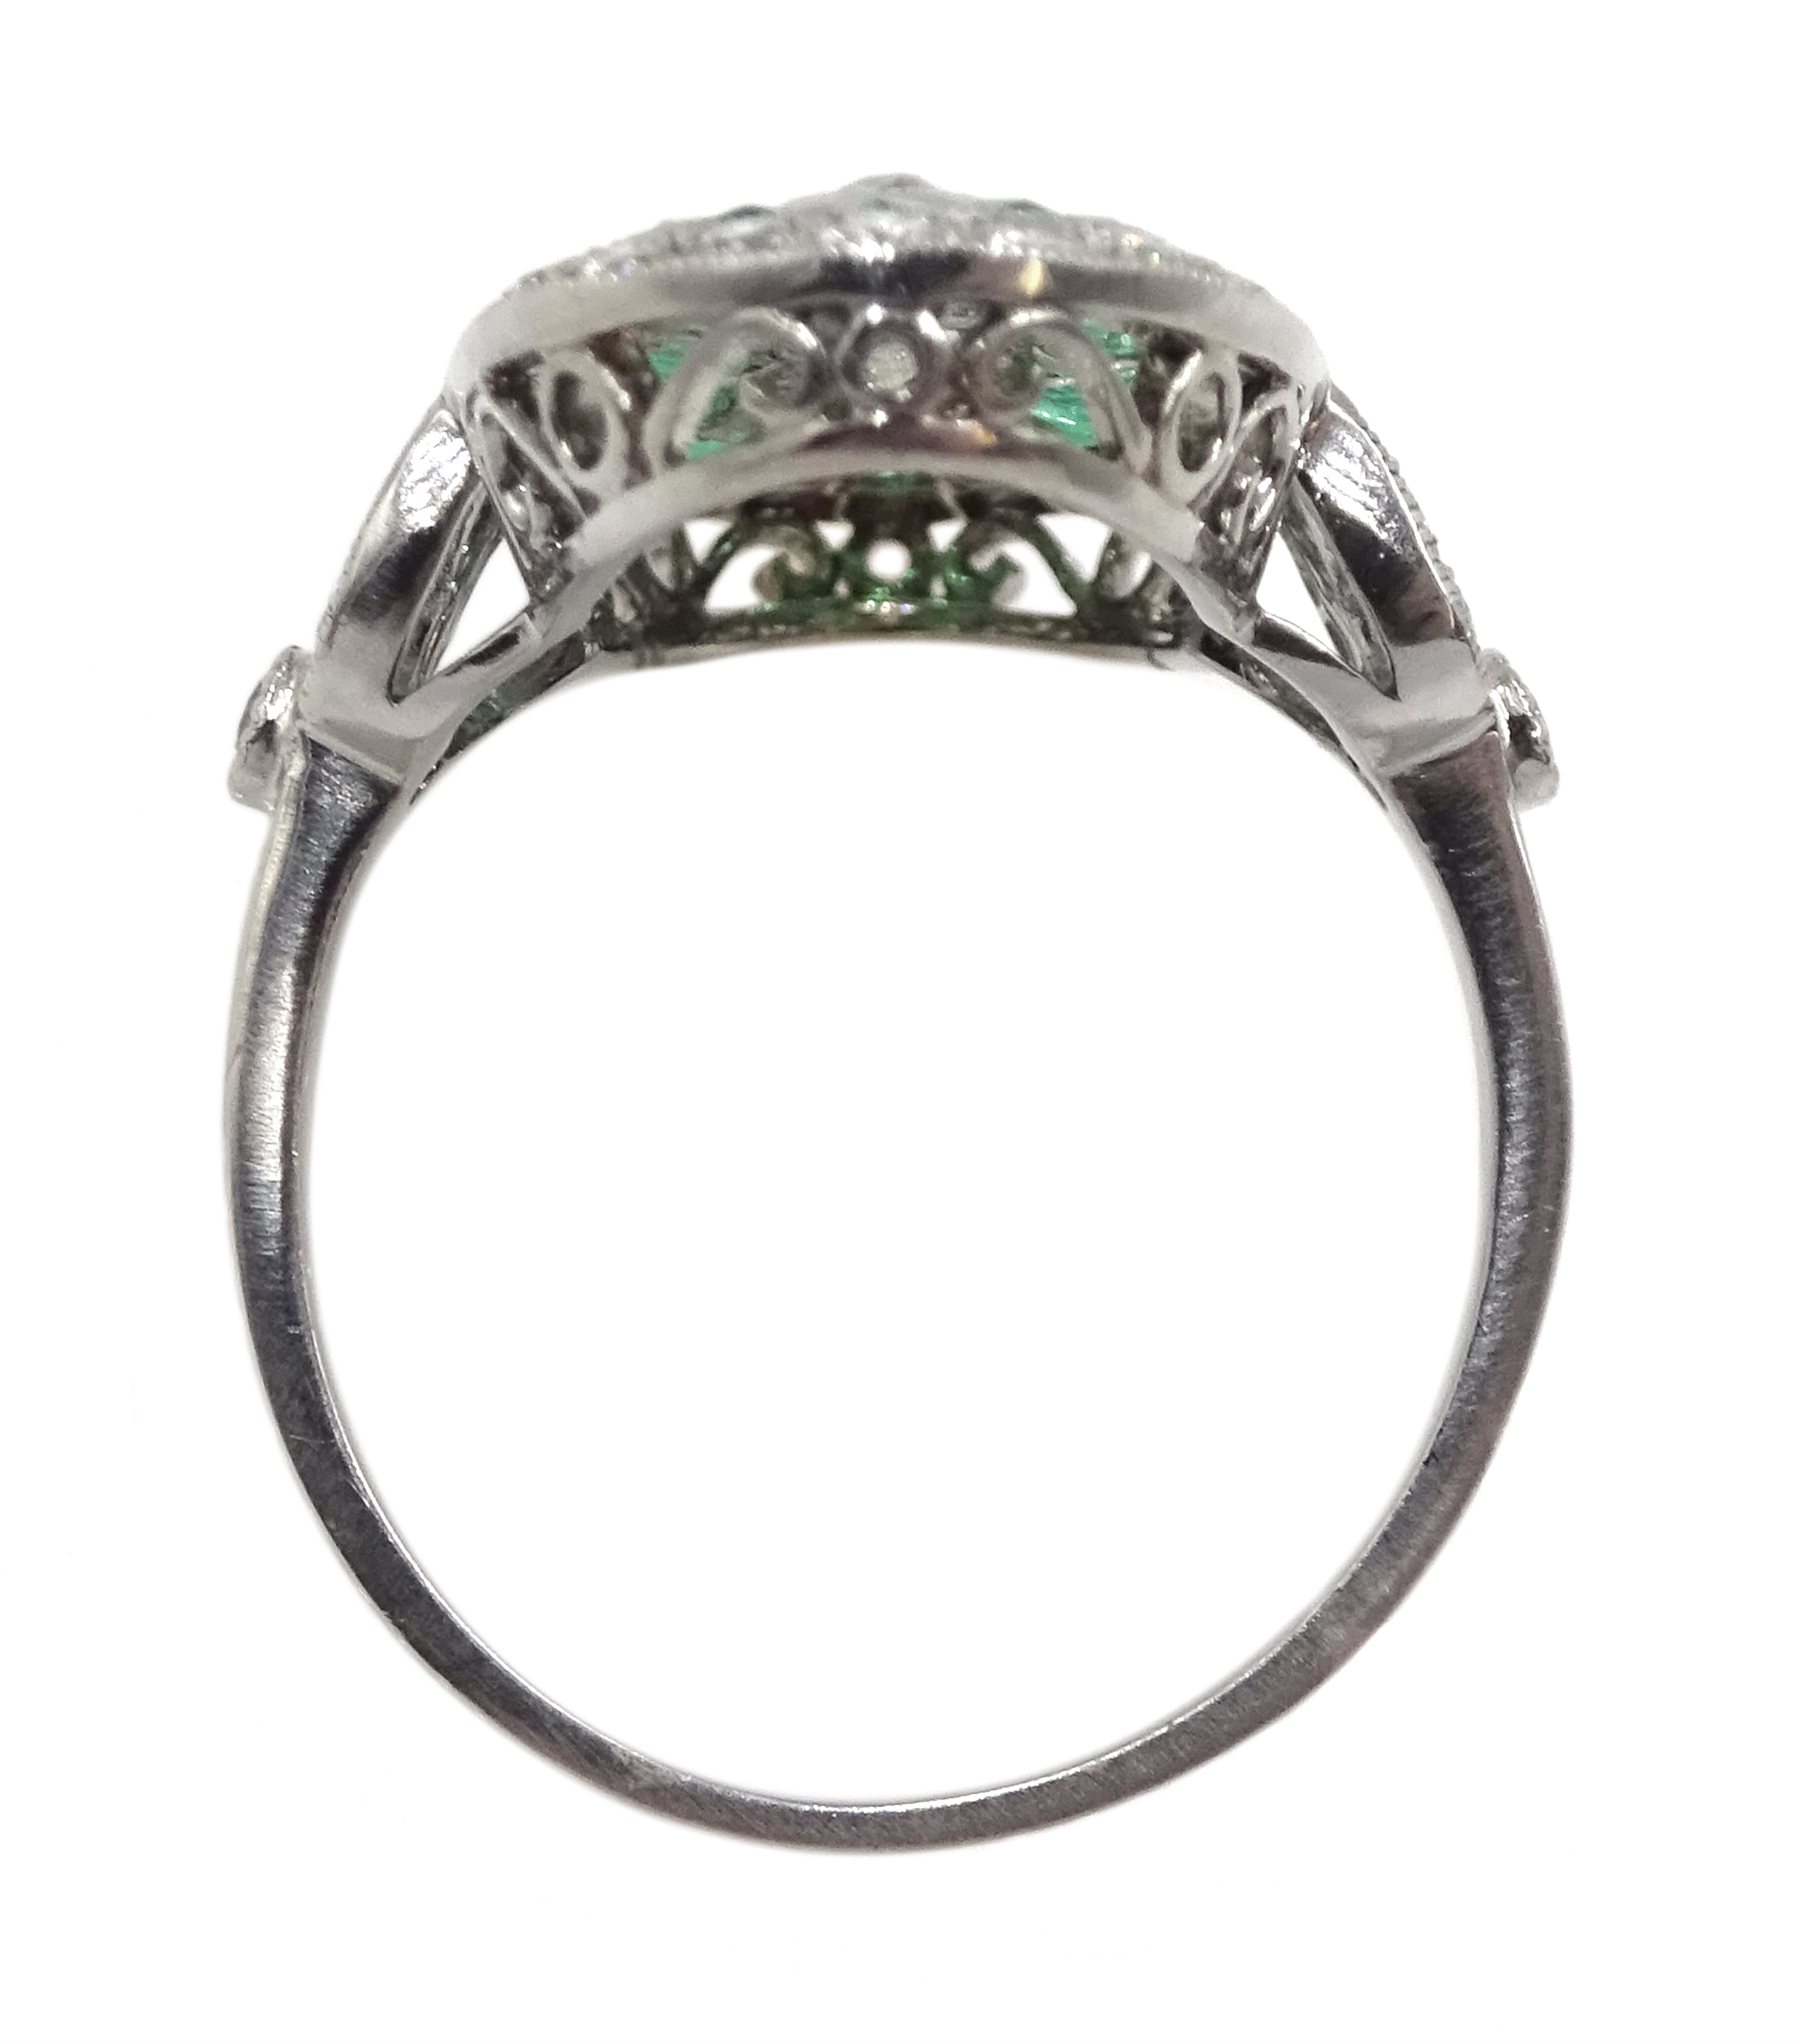 Platinum calibre cut emerald and round brilliant cut diamond oval panel ring - Image 5 of 6